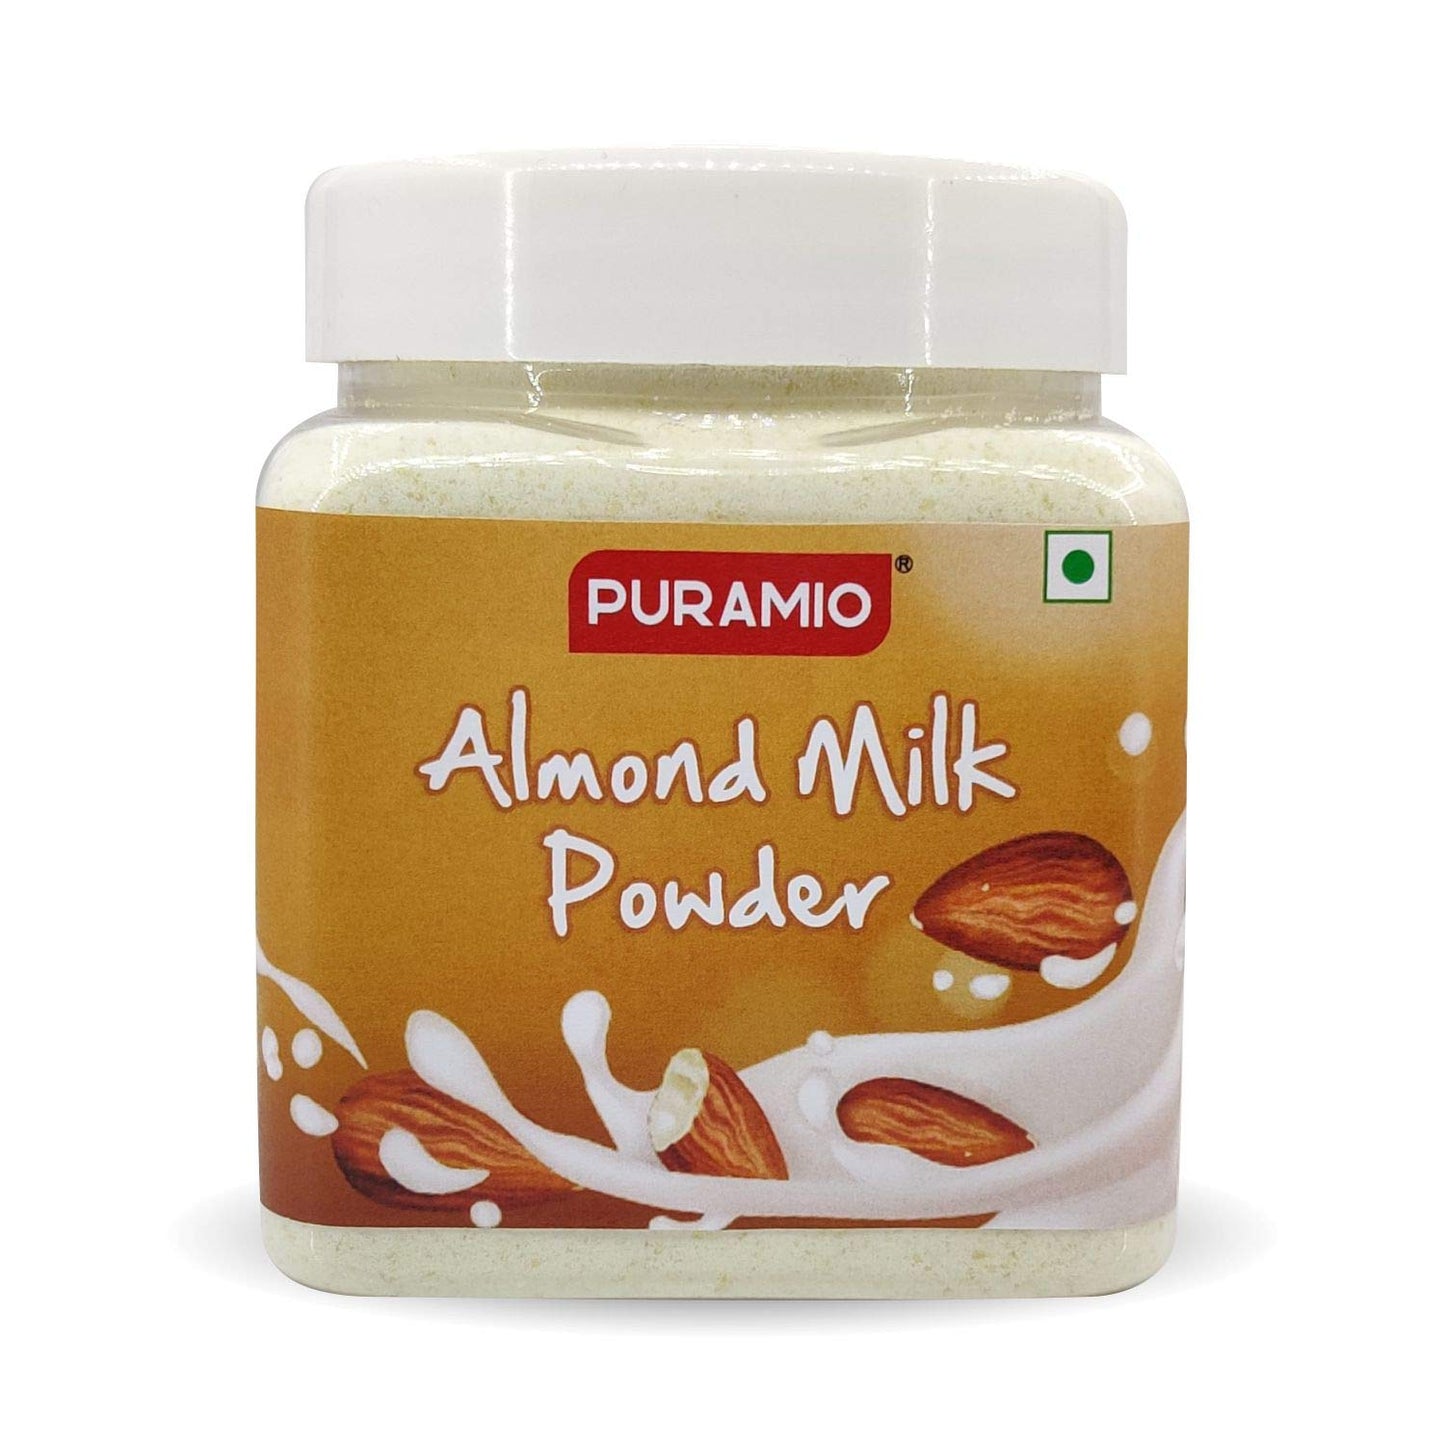 PURAMIO Almond Milk Powder [No Added Sugar]